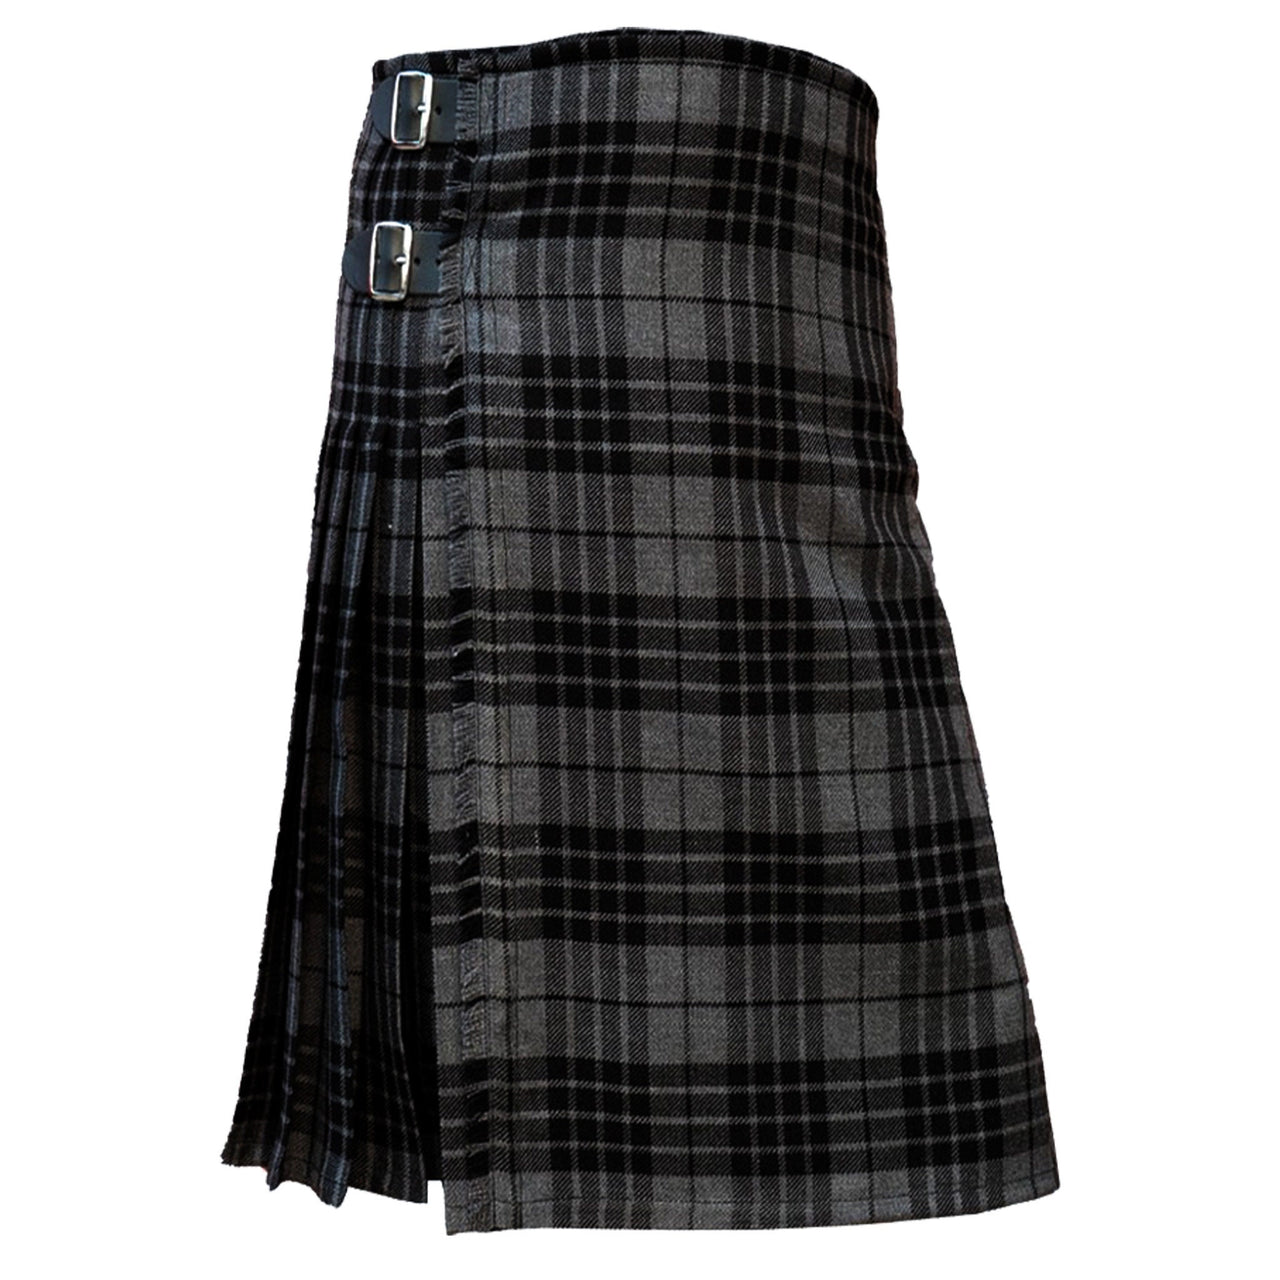 Scottish Traditional Tartan Kilt Highland Grey 8 Yards Highlander Men Clothing to Wear in Special Occasions